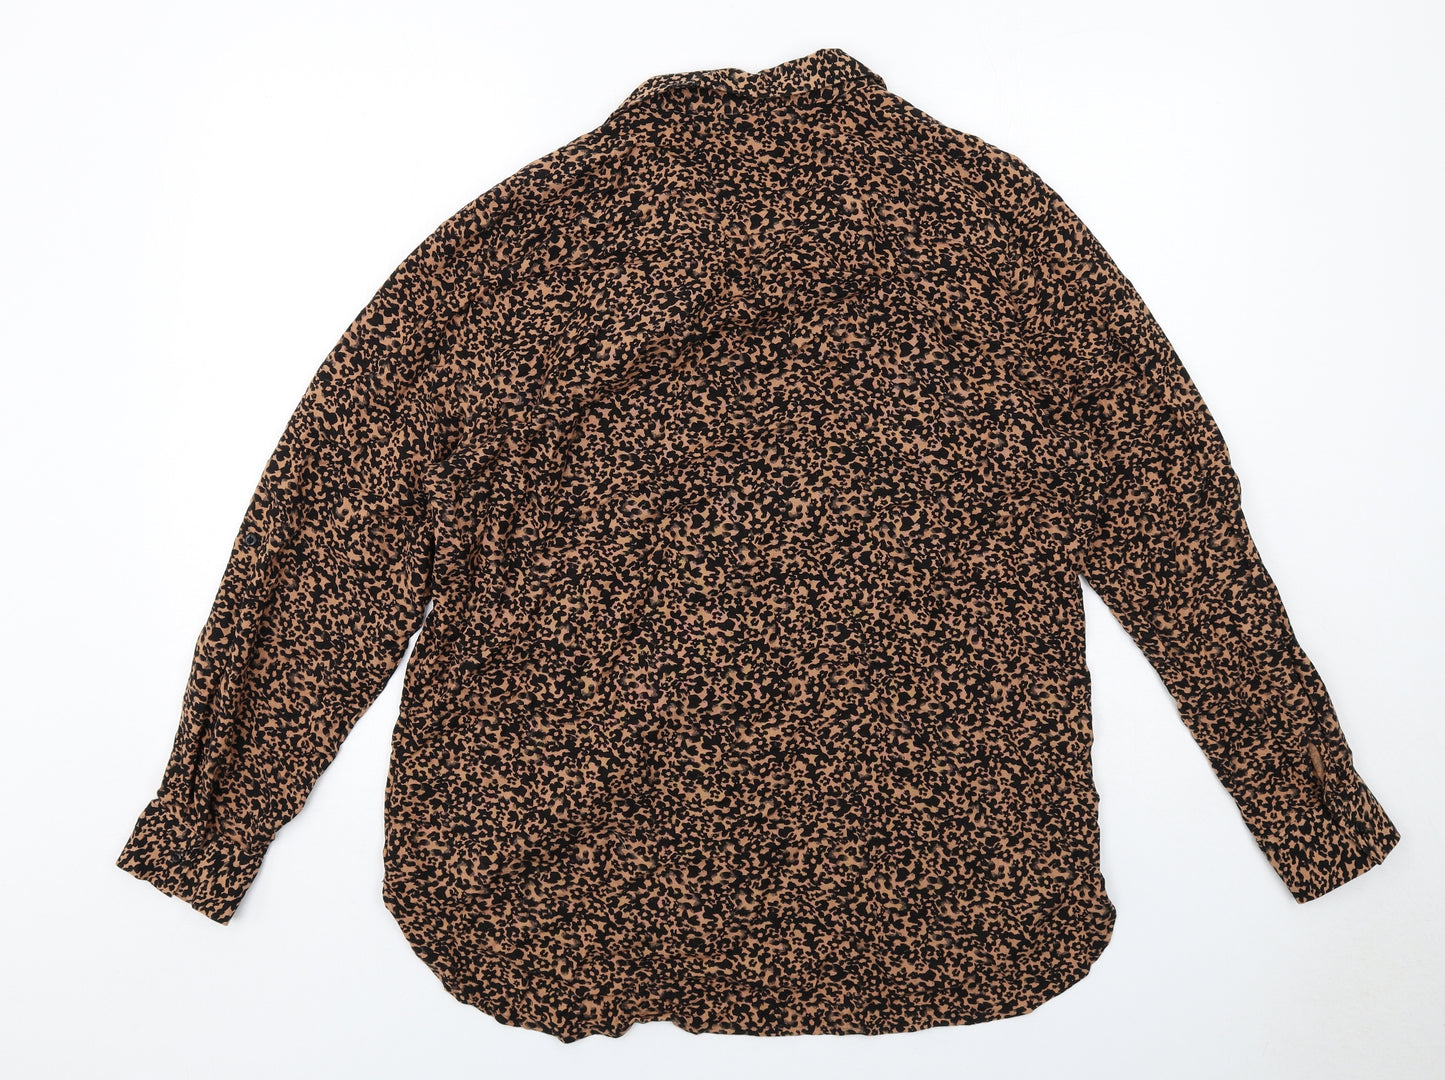 NEXT Womens Beige Animal Print Viscose Basic Button-Up Size 16 Collared - Leopard Print